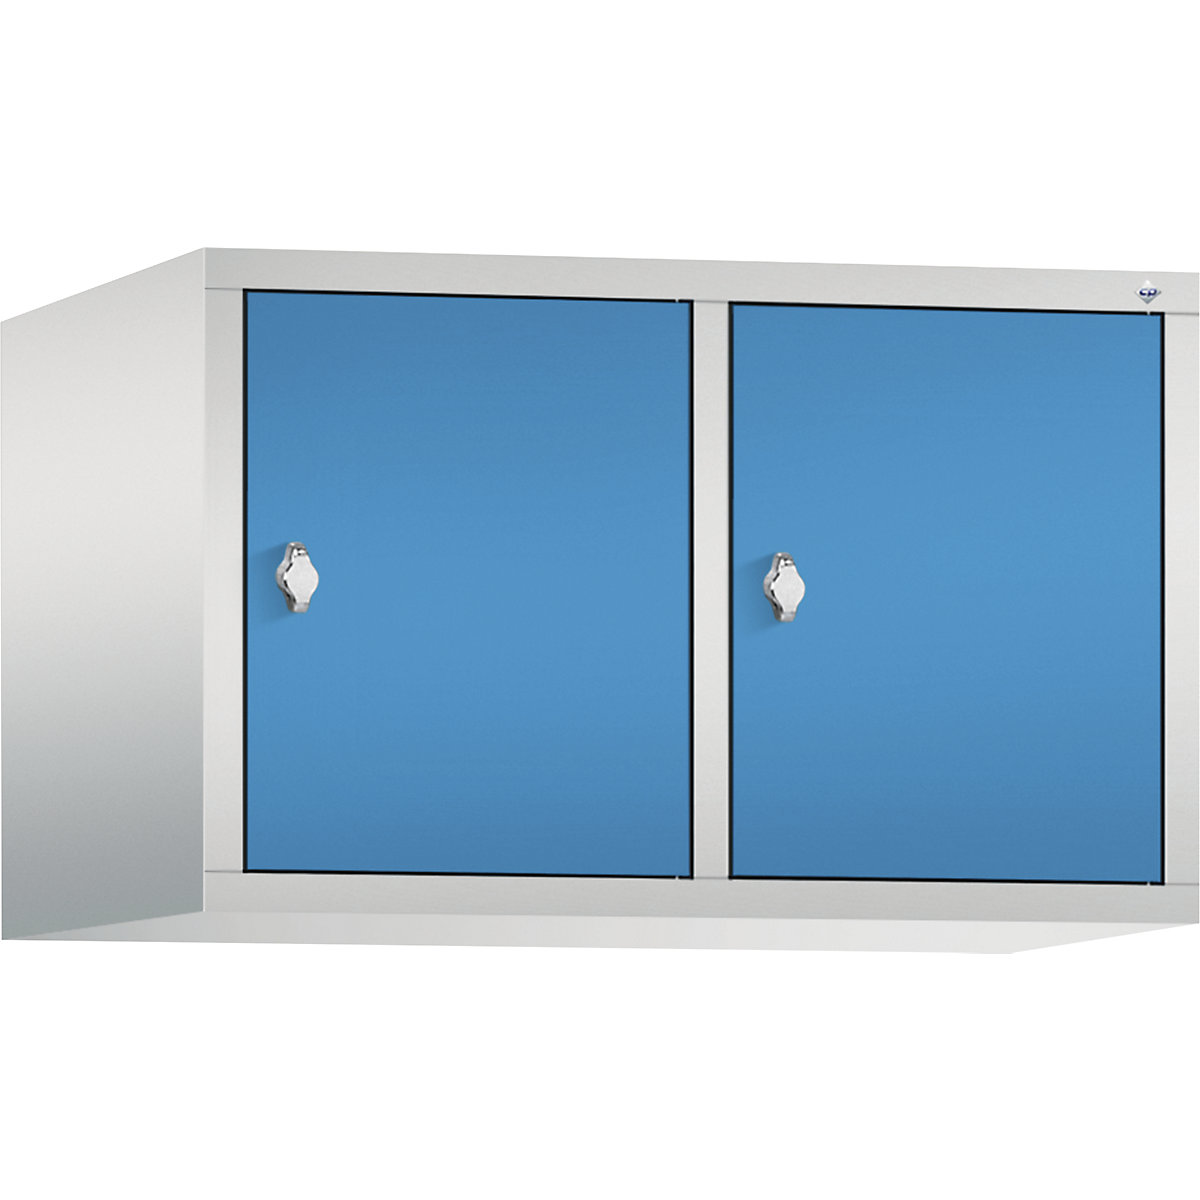 C+P – Altillo CLASSIC, 2 compartimentos, anchura de compartimento 400 mm, gris luminoso / azul luminoso